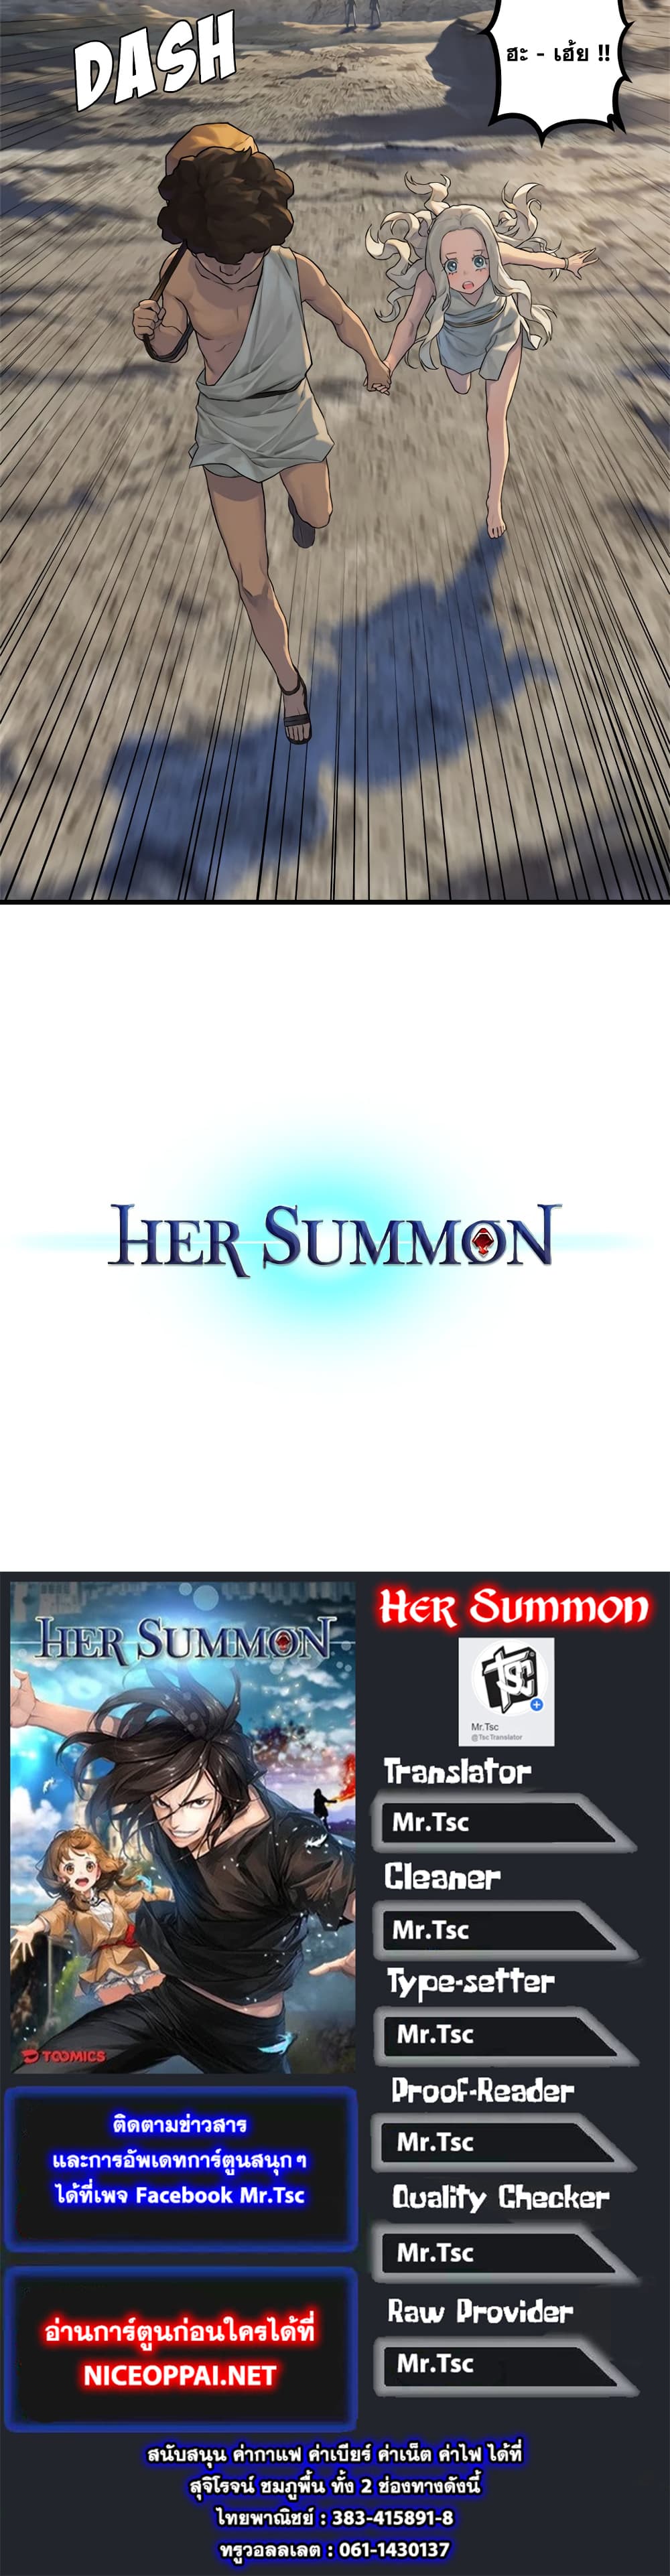 Her Summon 76 (48)